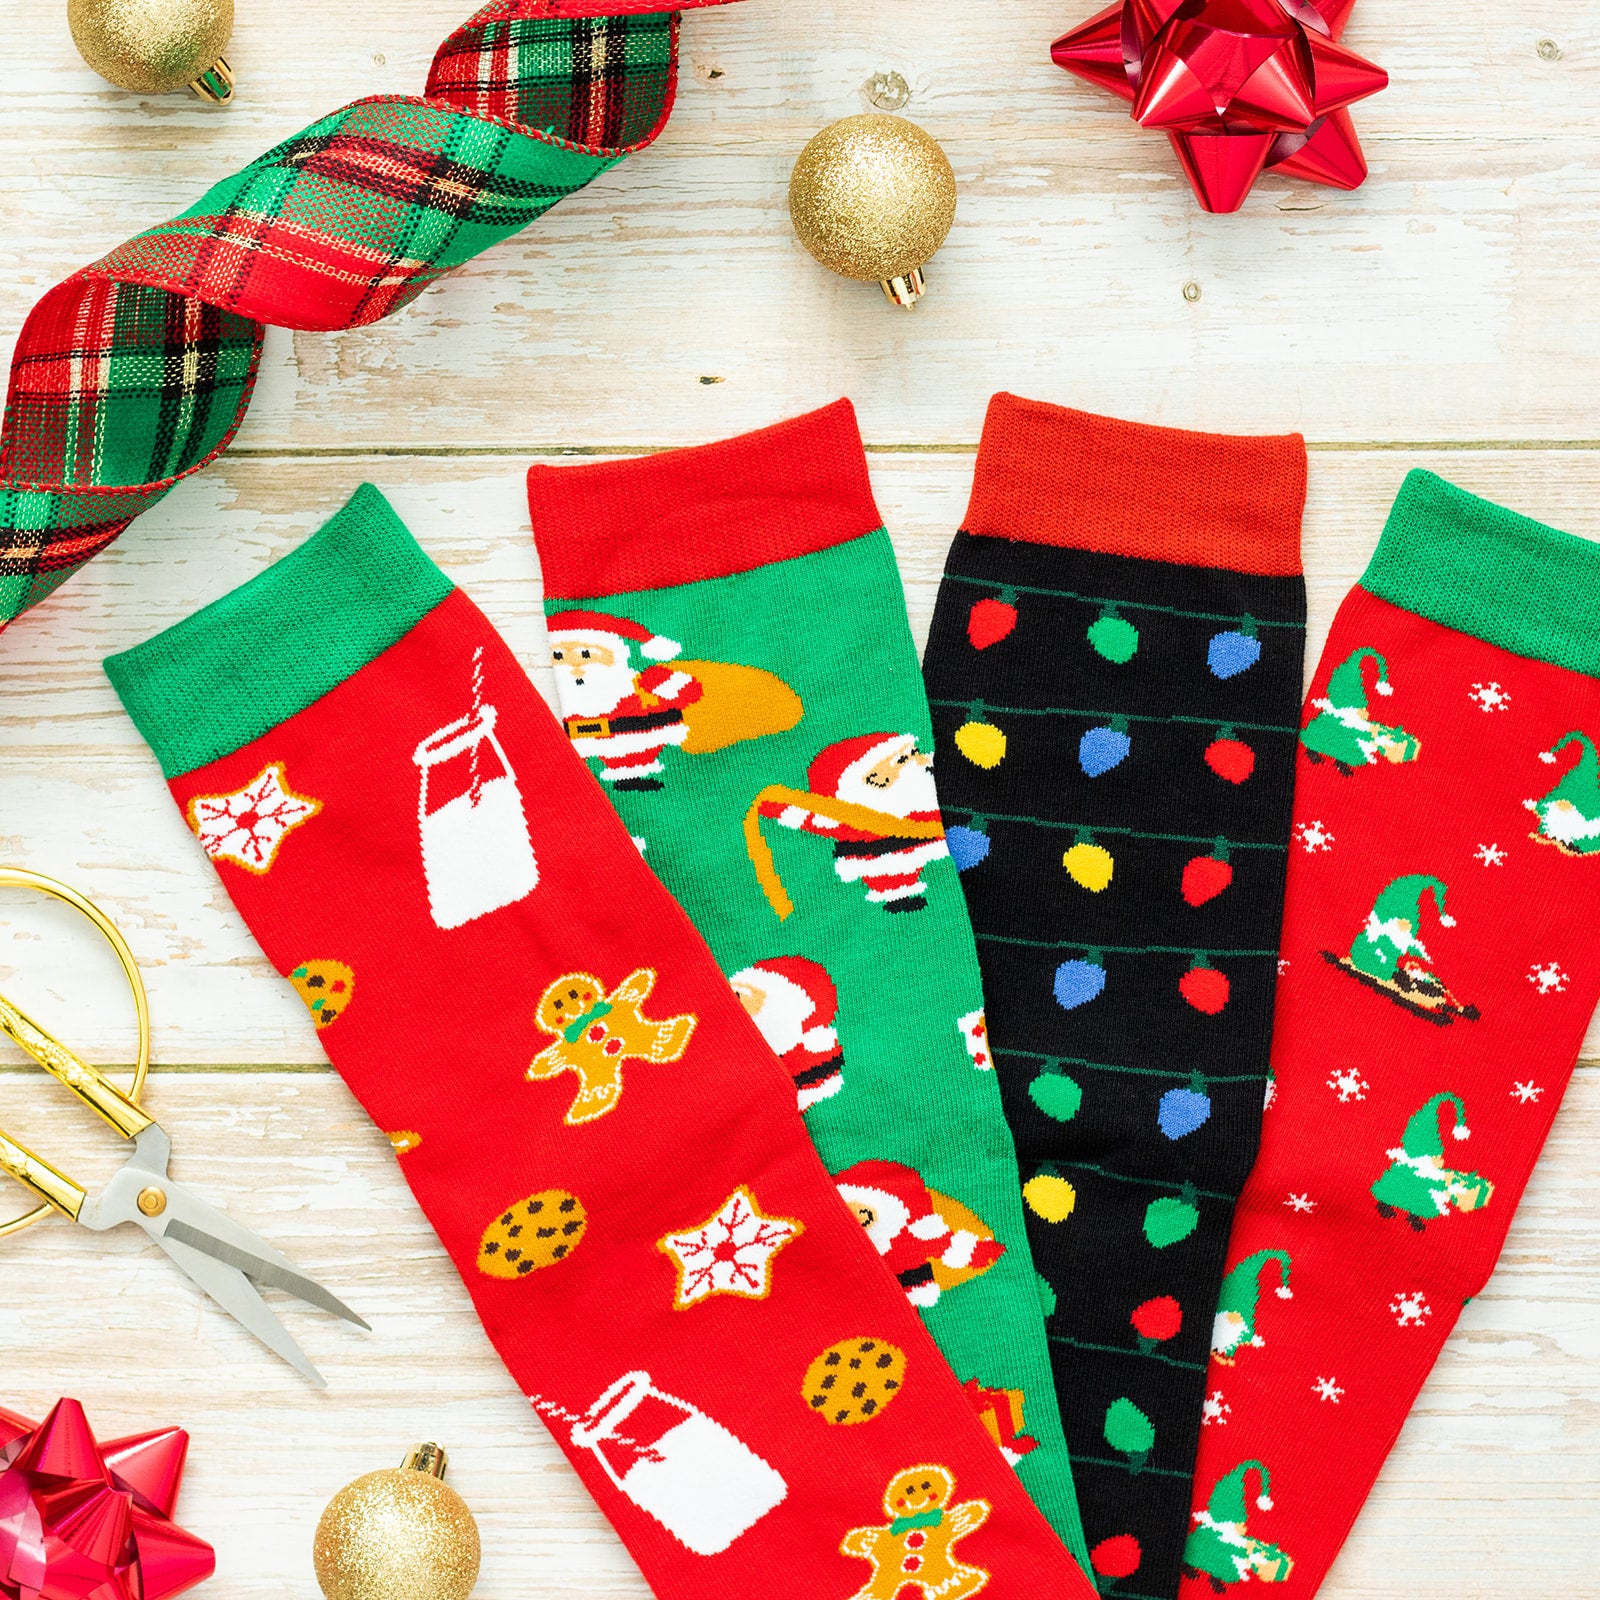 Fun Holiday Socks That Will Make Anyone Light Up